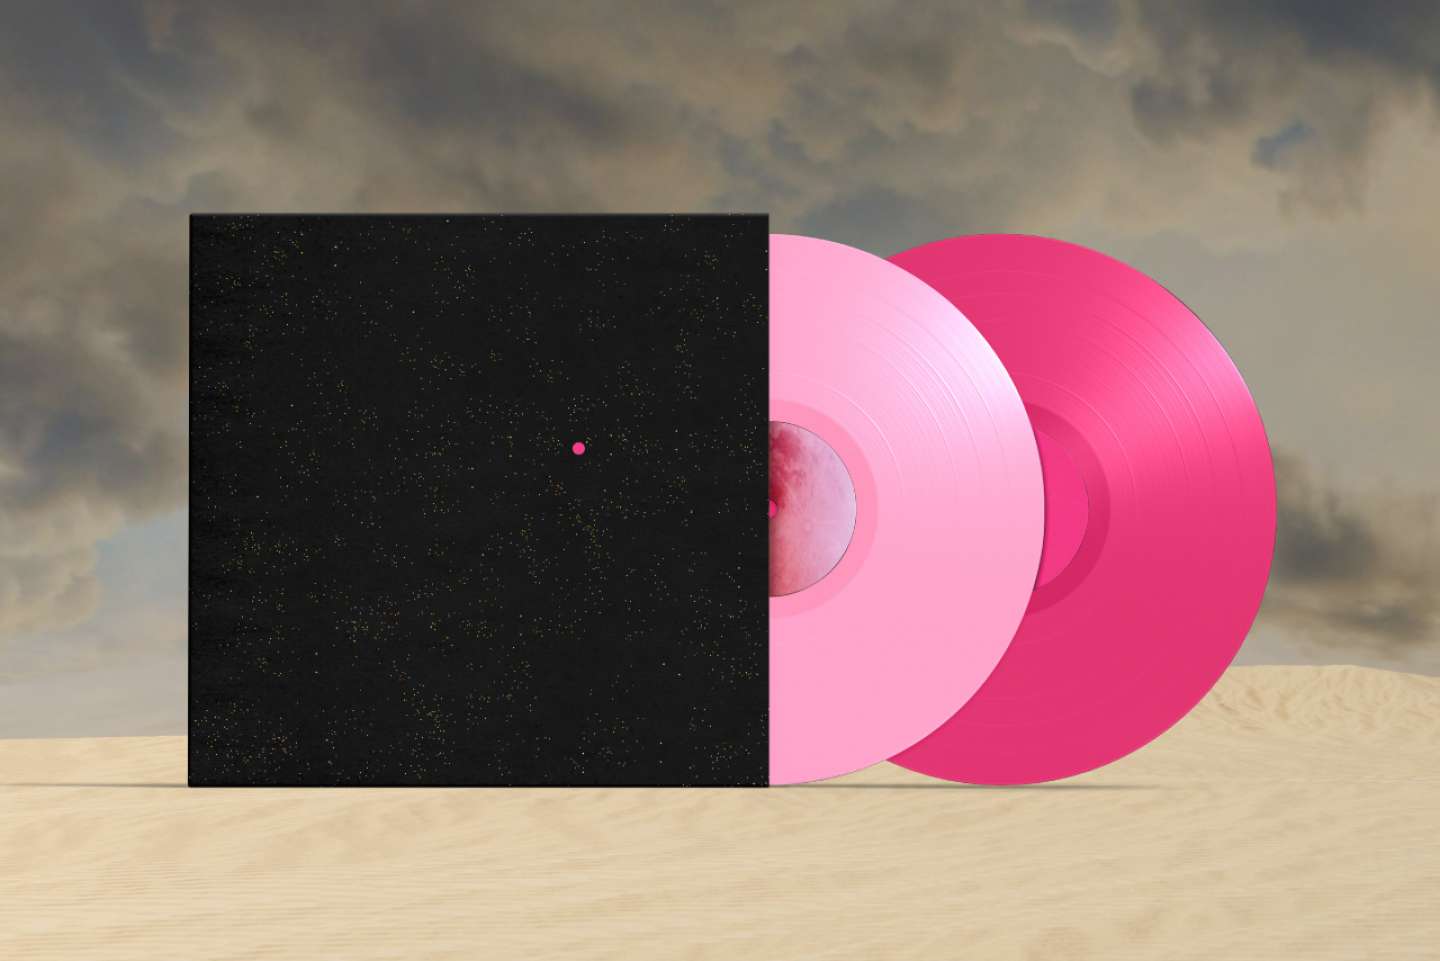 Pink Planet